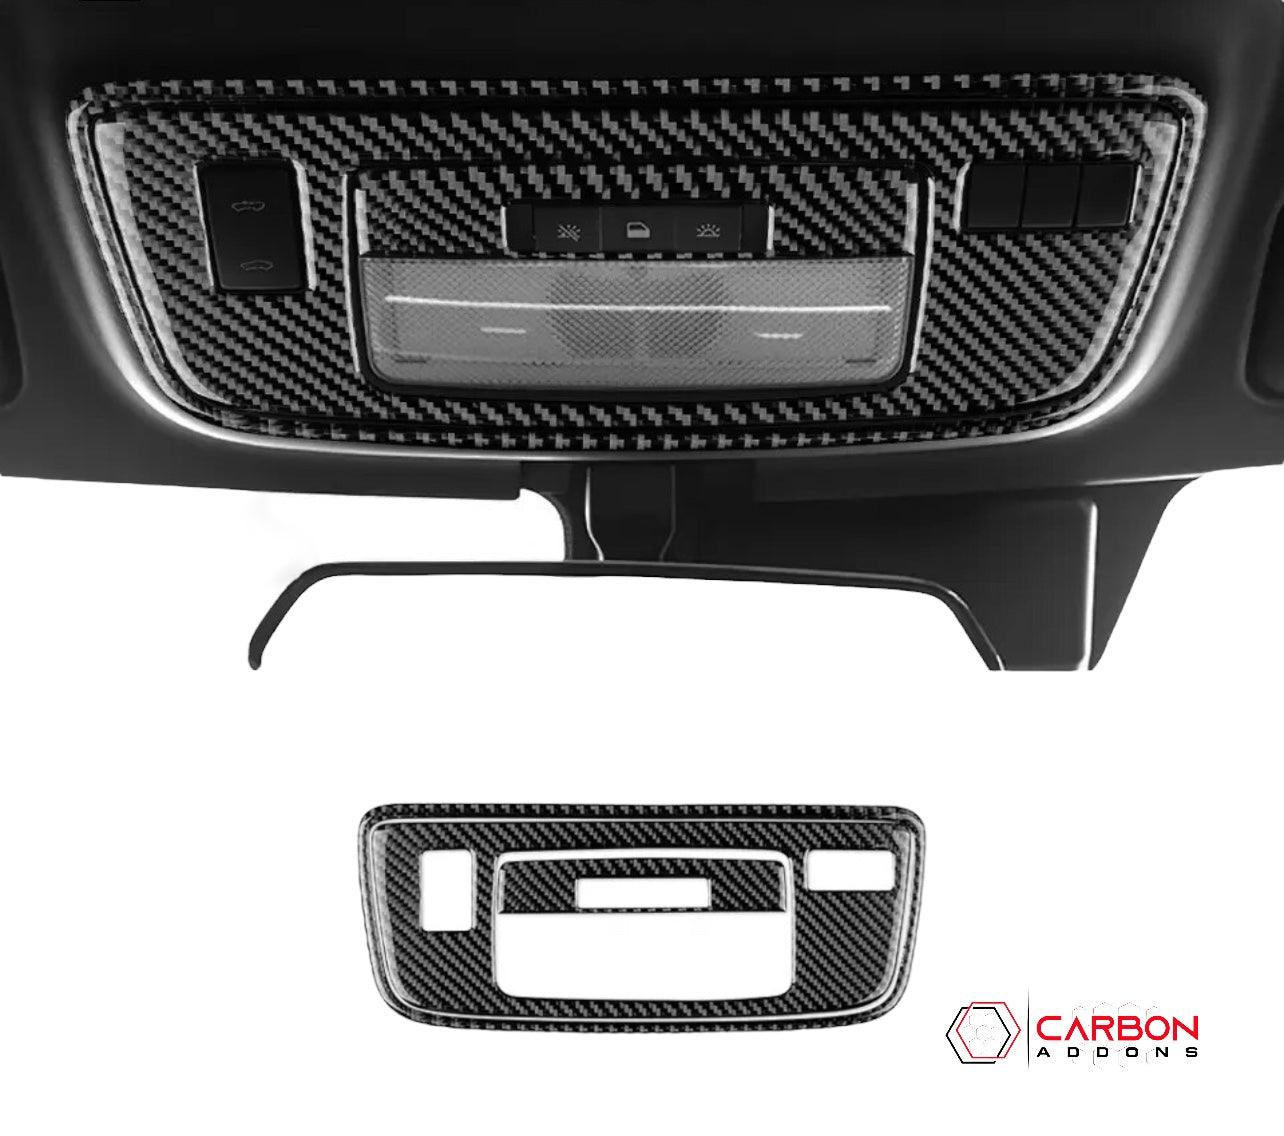 2010-2015 Chevy Camaro Carbon Fiber Dome light Trim Overlay - carbonaddons Carbon Fiber Parts, Accessories, Upgrades, Mods